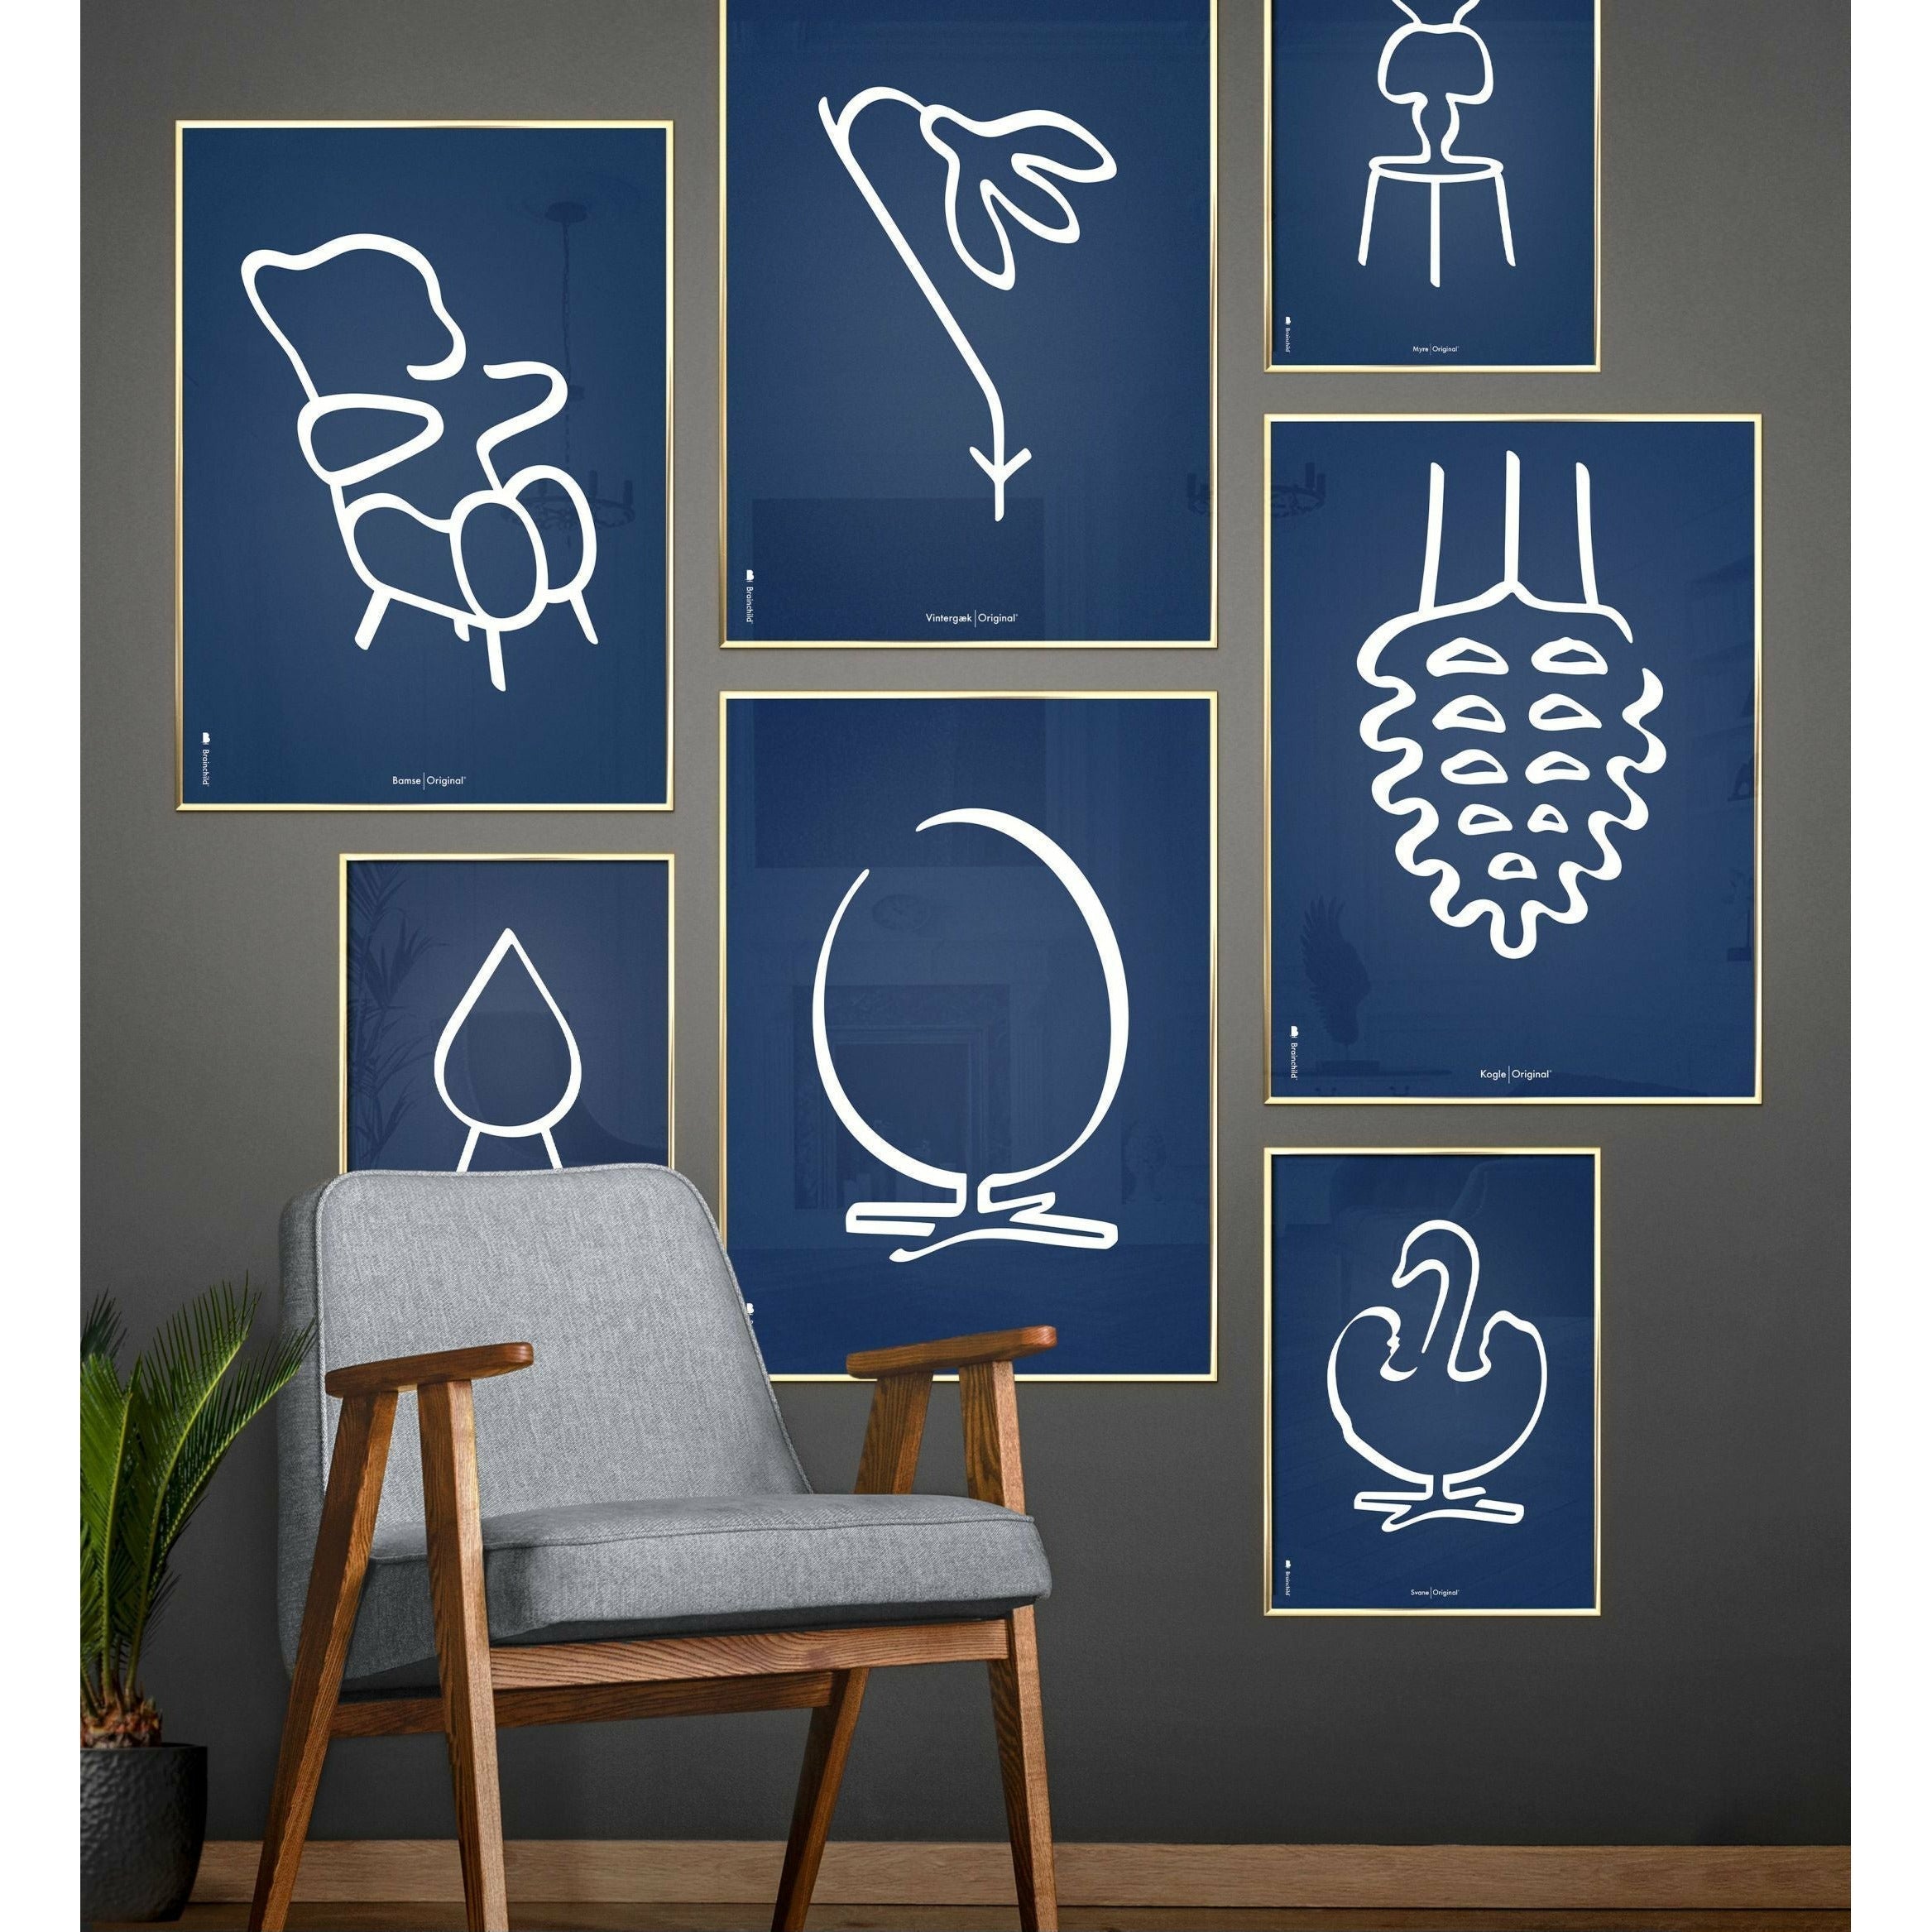 Brainchild Egg Line Poster, Frame Made Of Light Wood 70x100 Cm, Blue Background